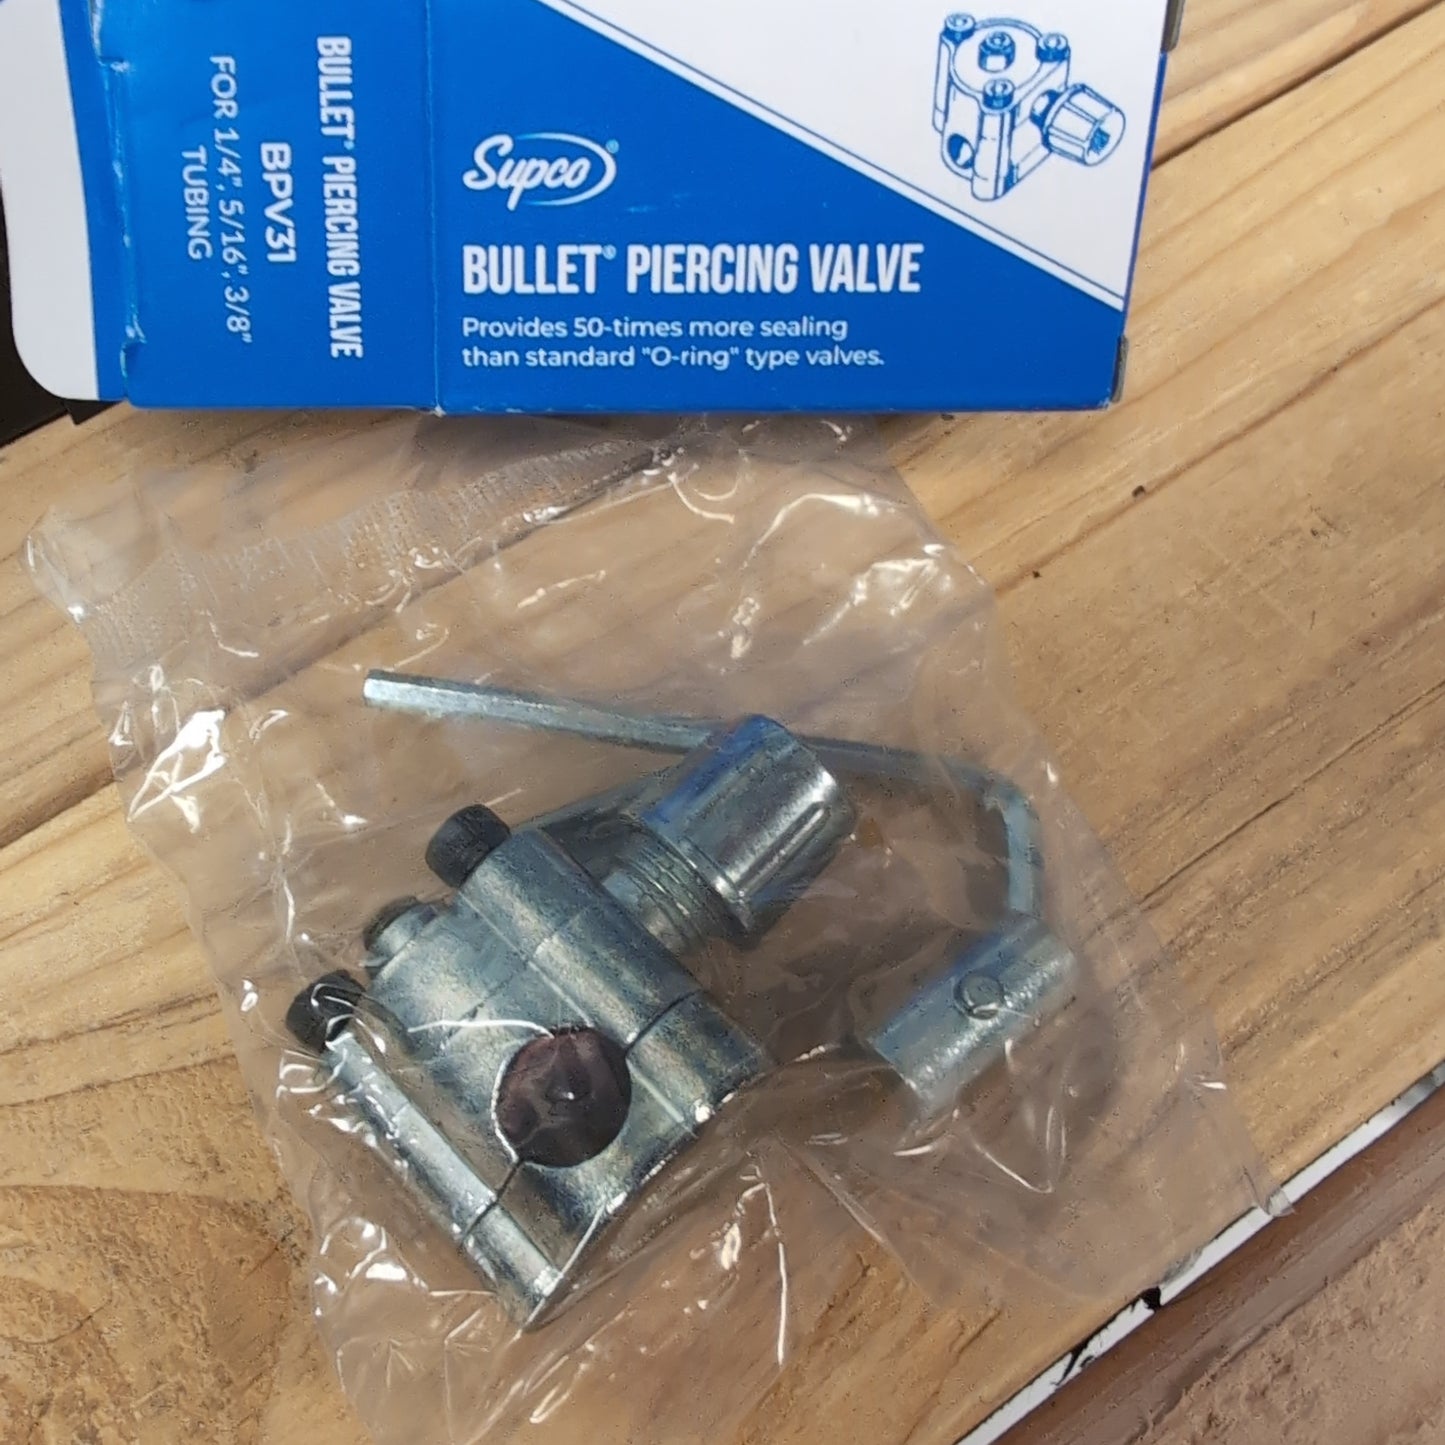 New Supco bullet piercing valve